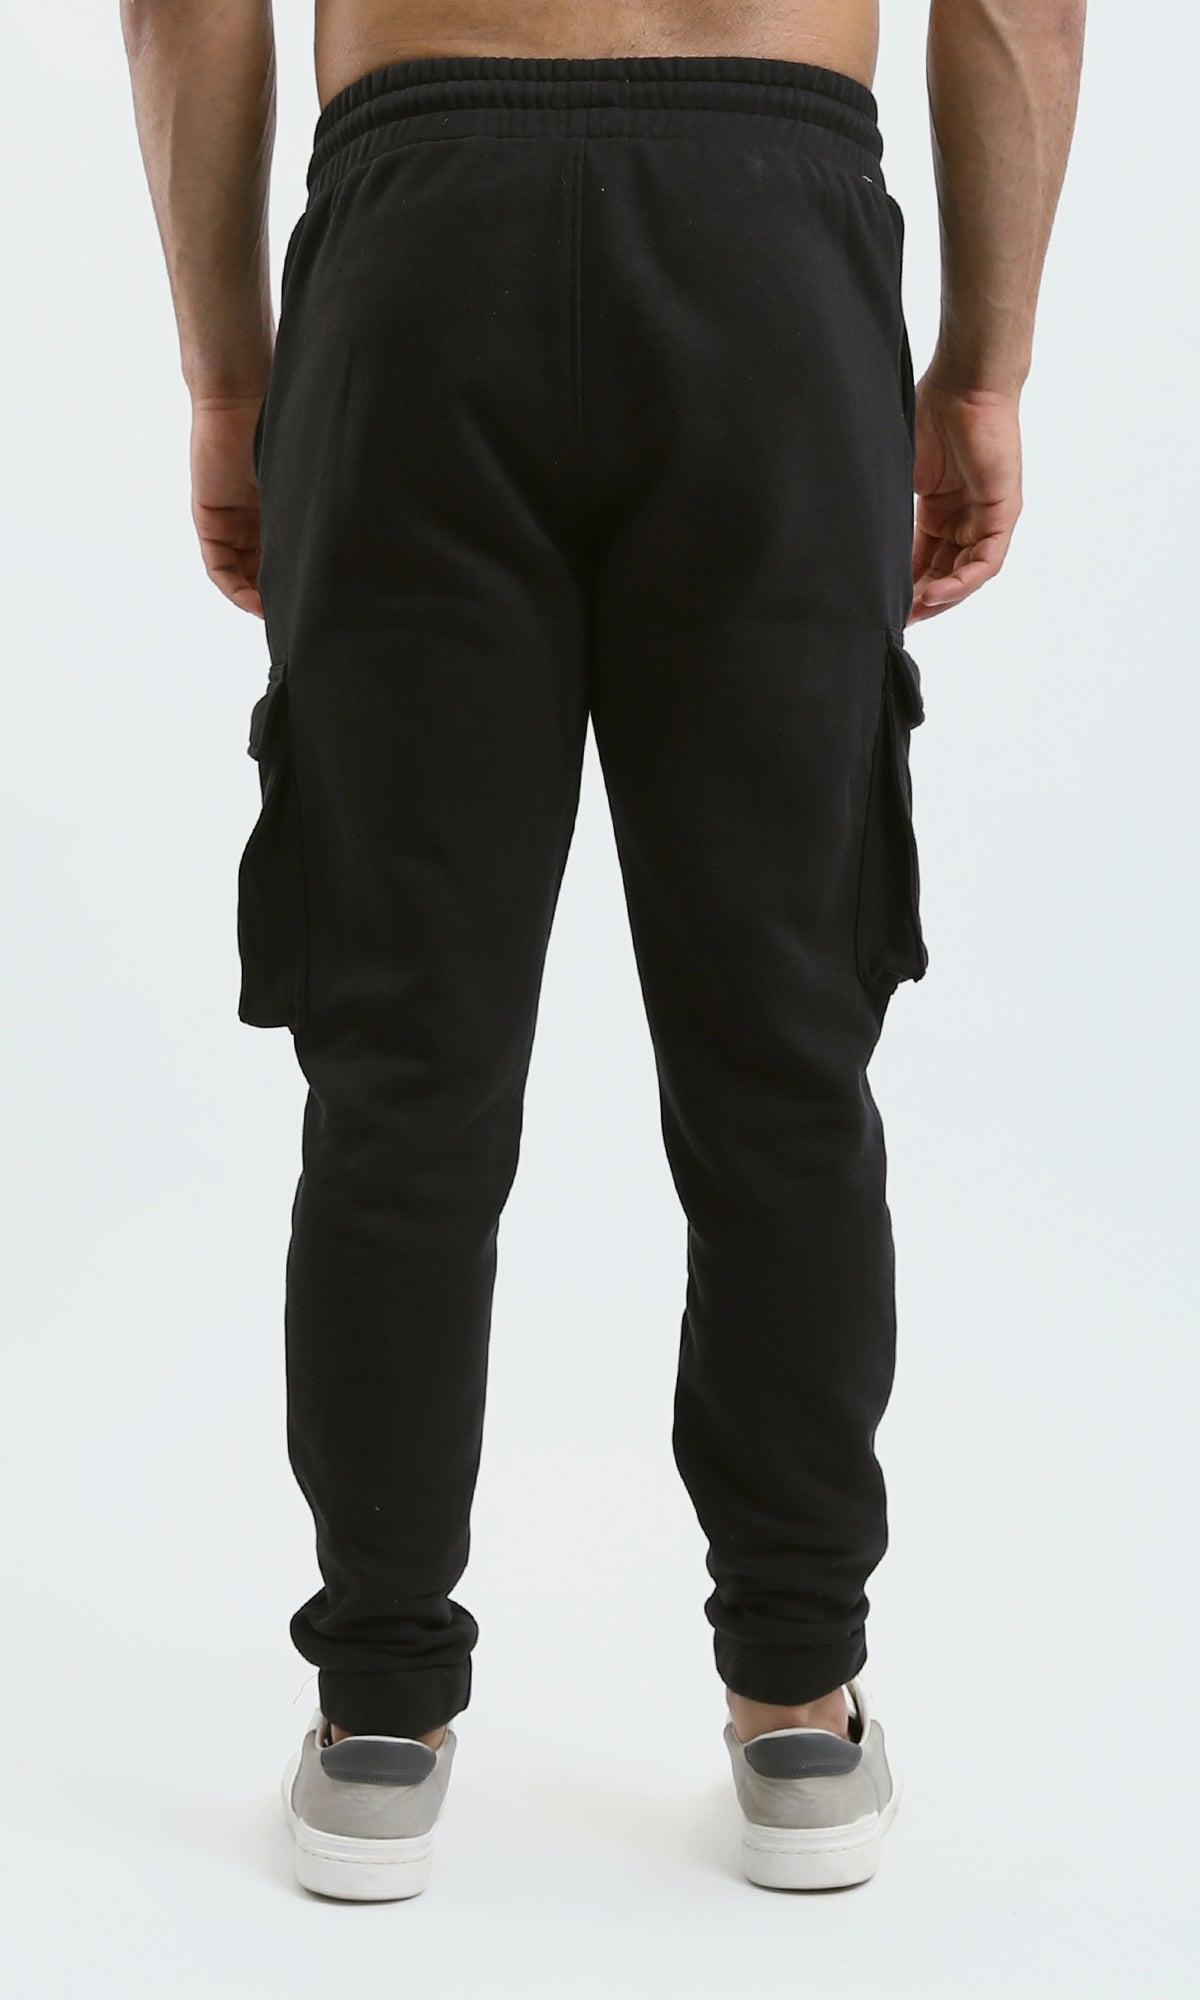 O178904 Black Slip On Solid Jogger Pants With Hem